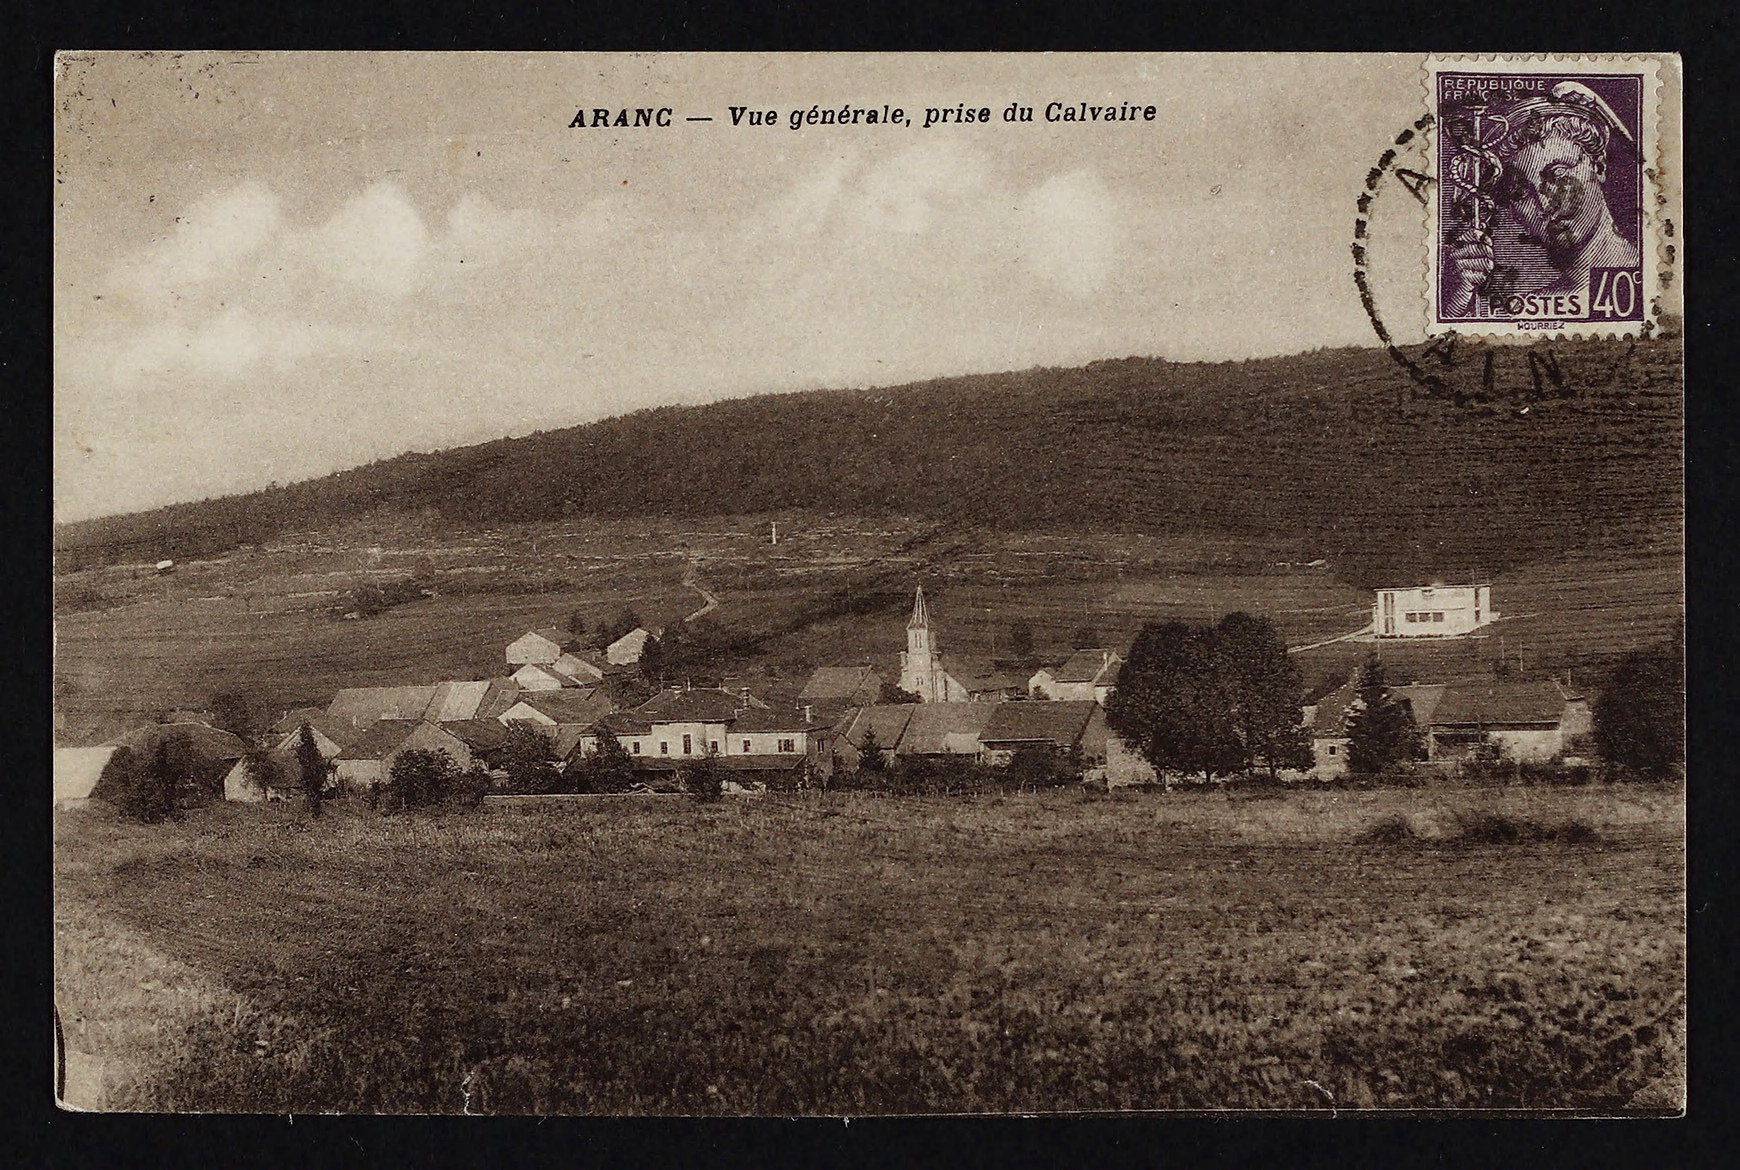 village d'aranc en 1941